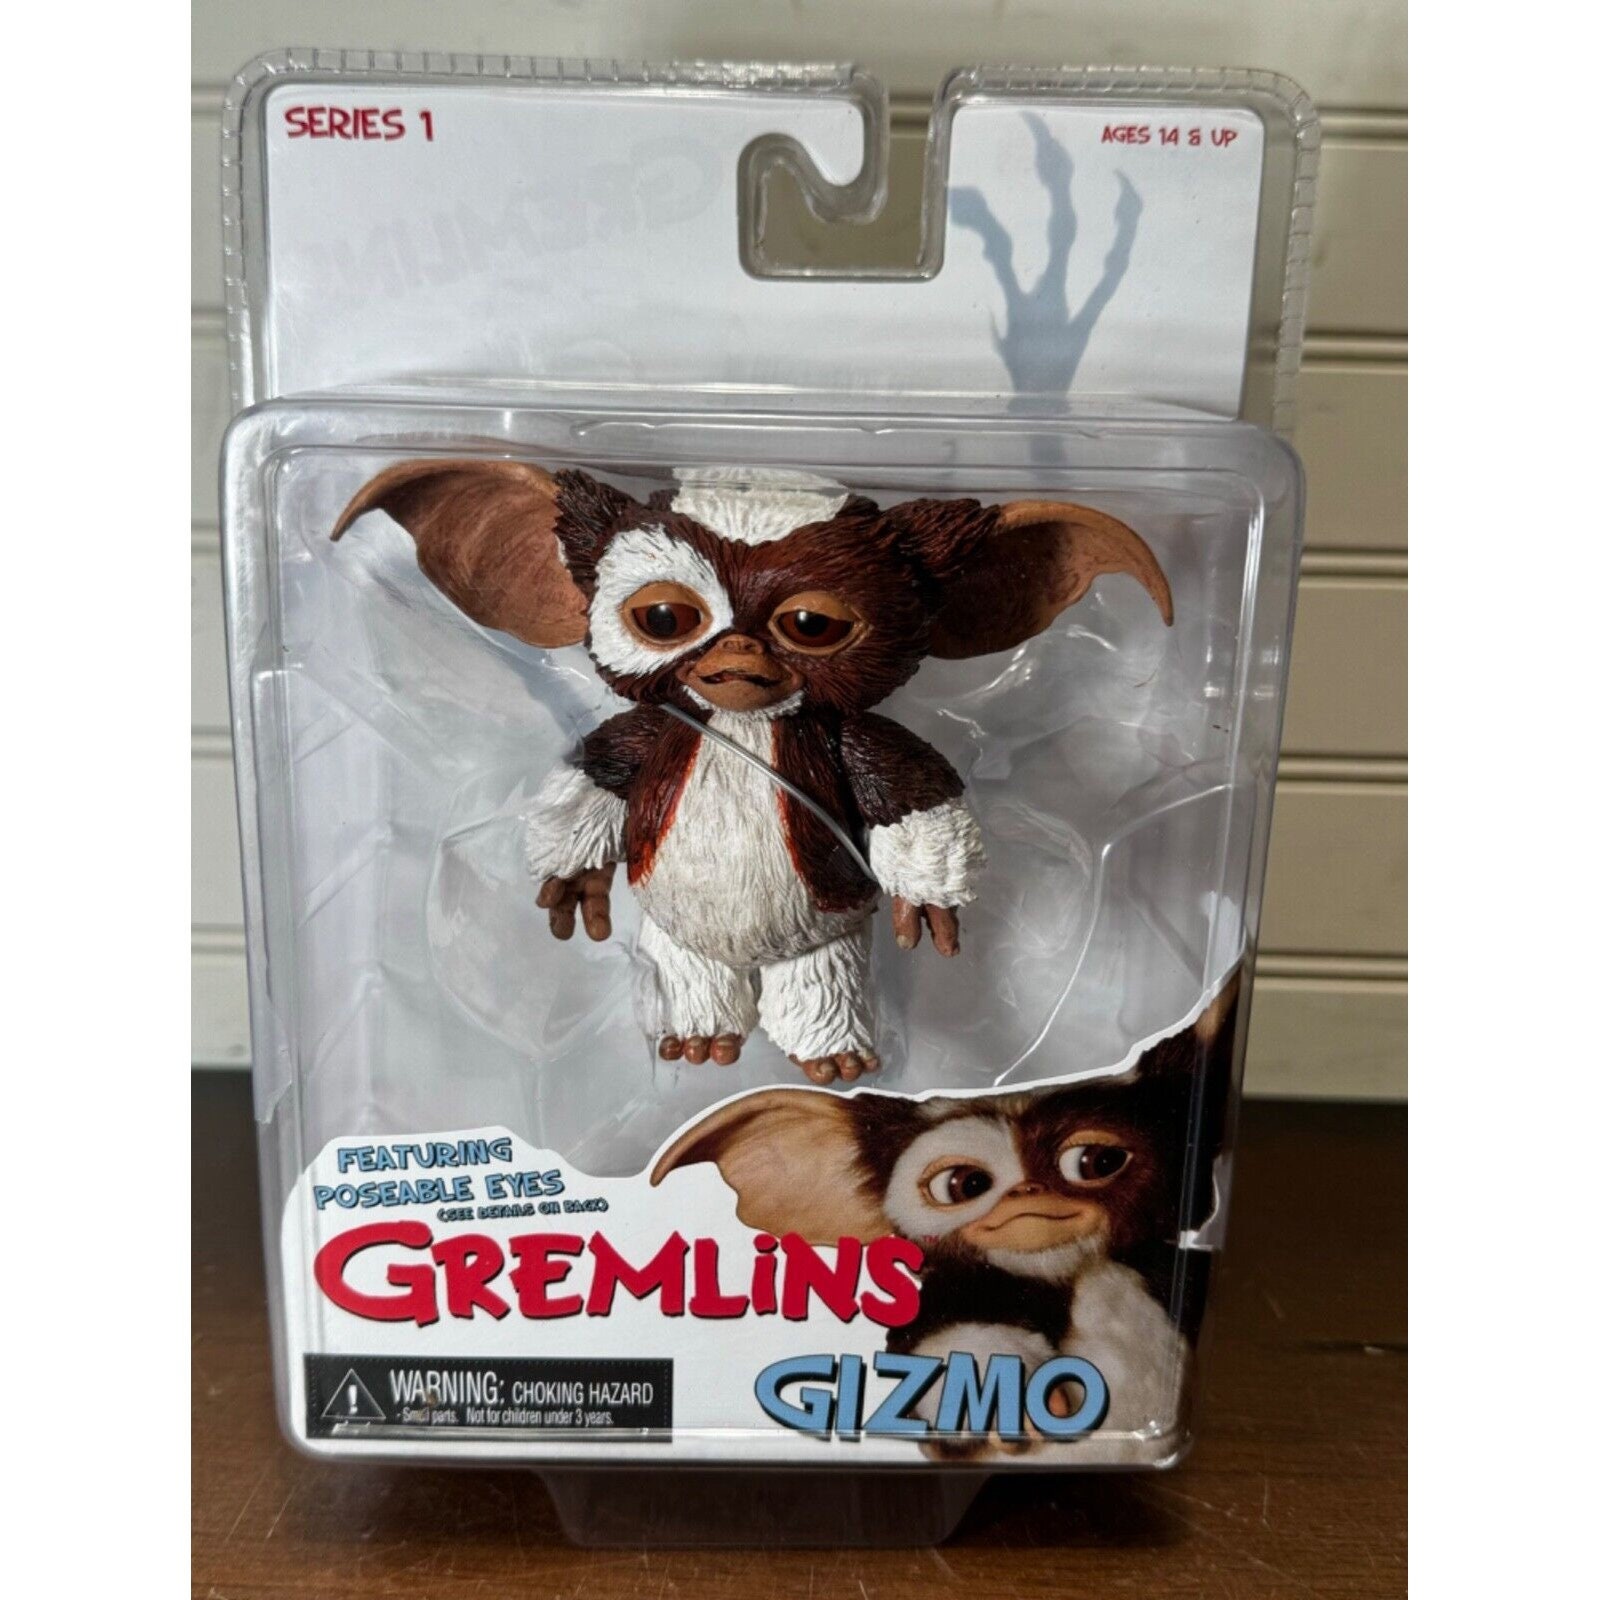 VTG Gizmo Mogwai, Gremlins, Warner Bros, Plush Toy, 40сm. Made in Spain,  From 1990s 